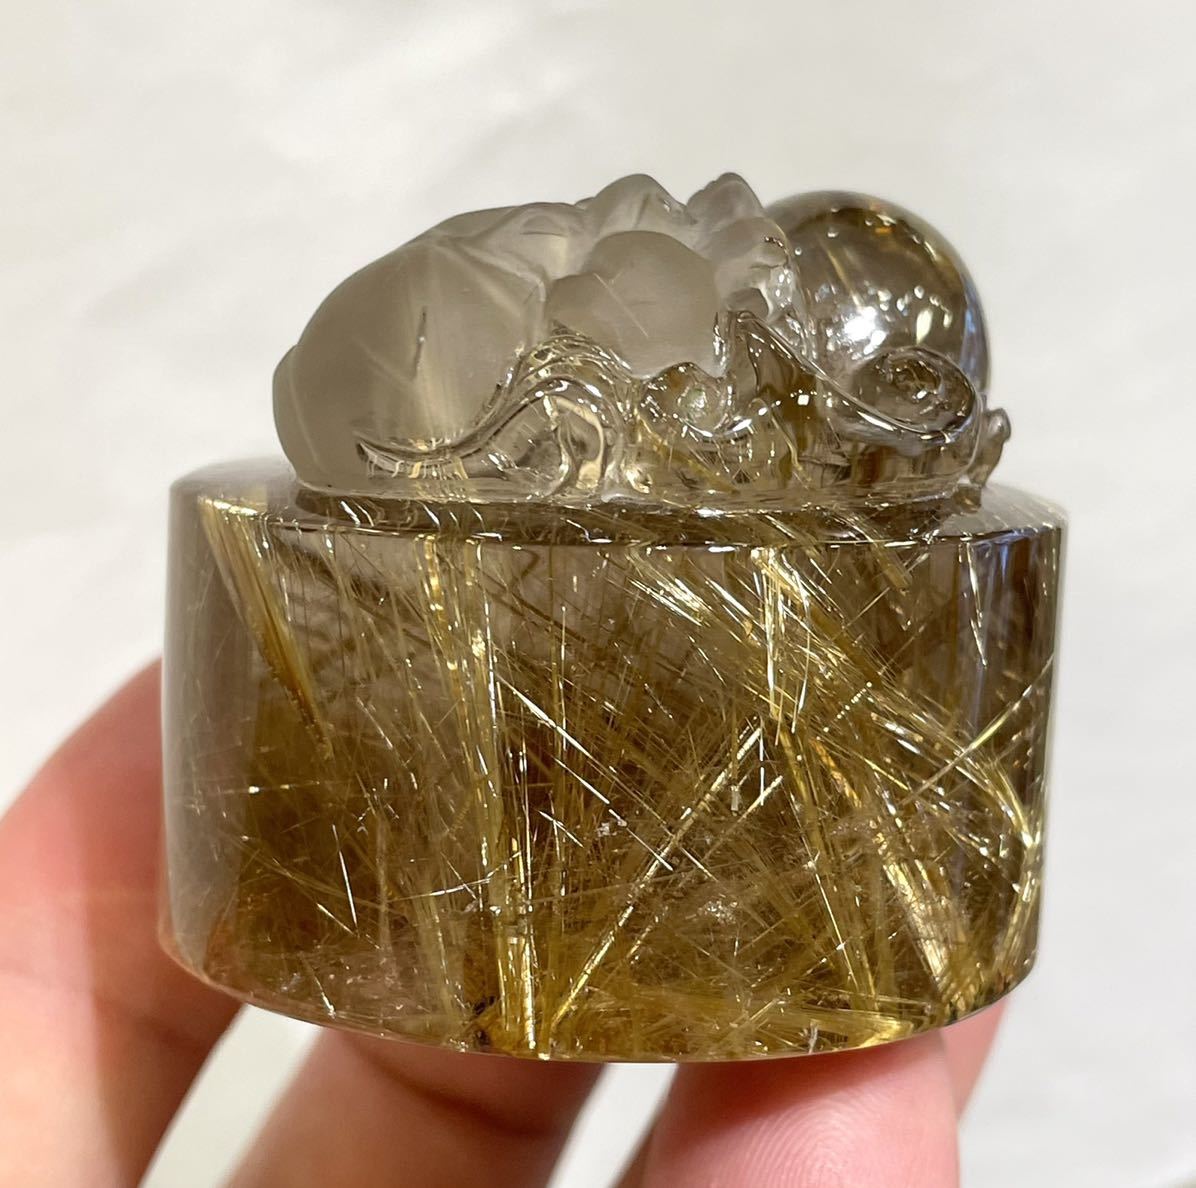 SALE／66%OFF】 特選 究極の逸品 最高品質ゴールドタイチンルチル水晶